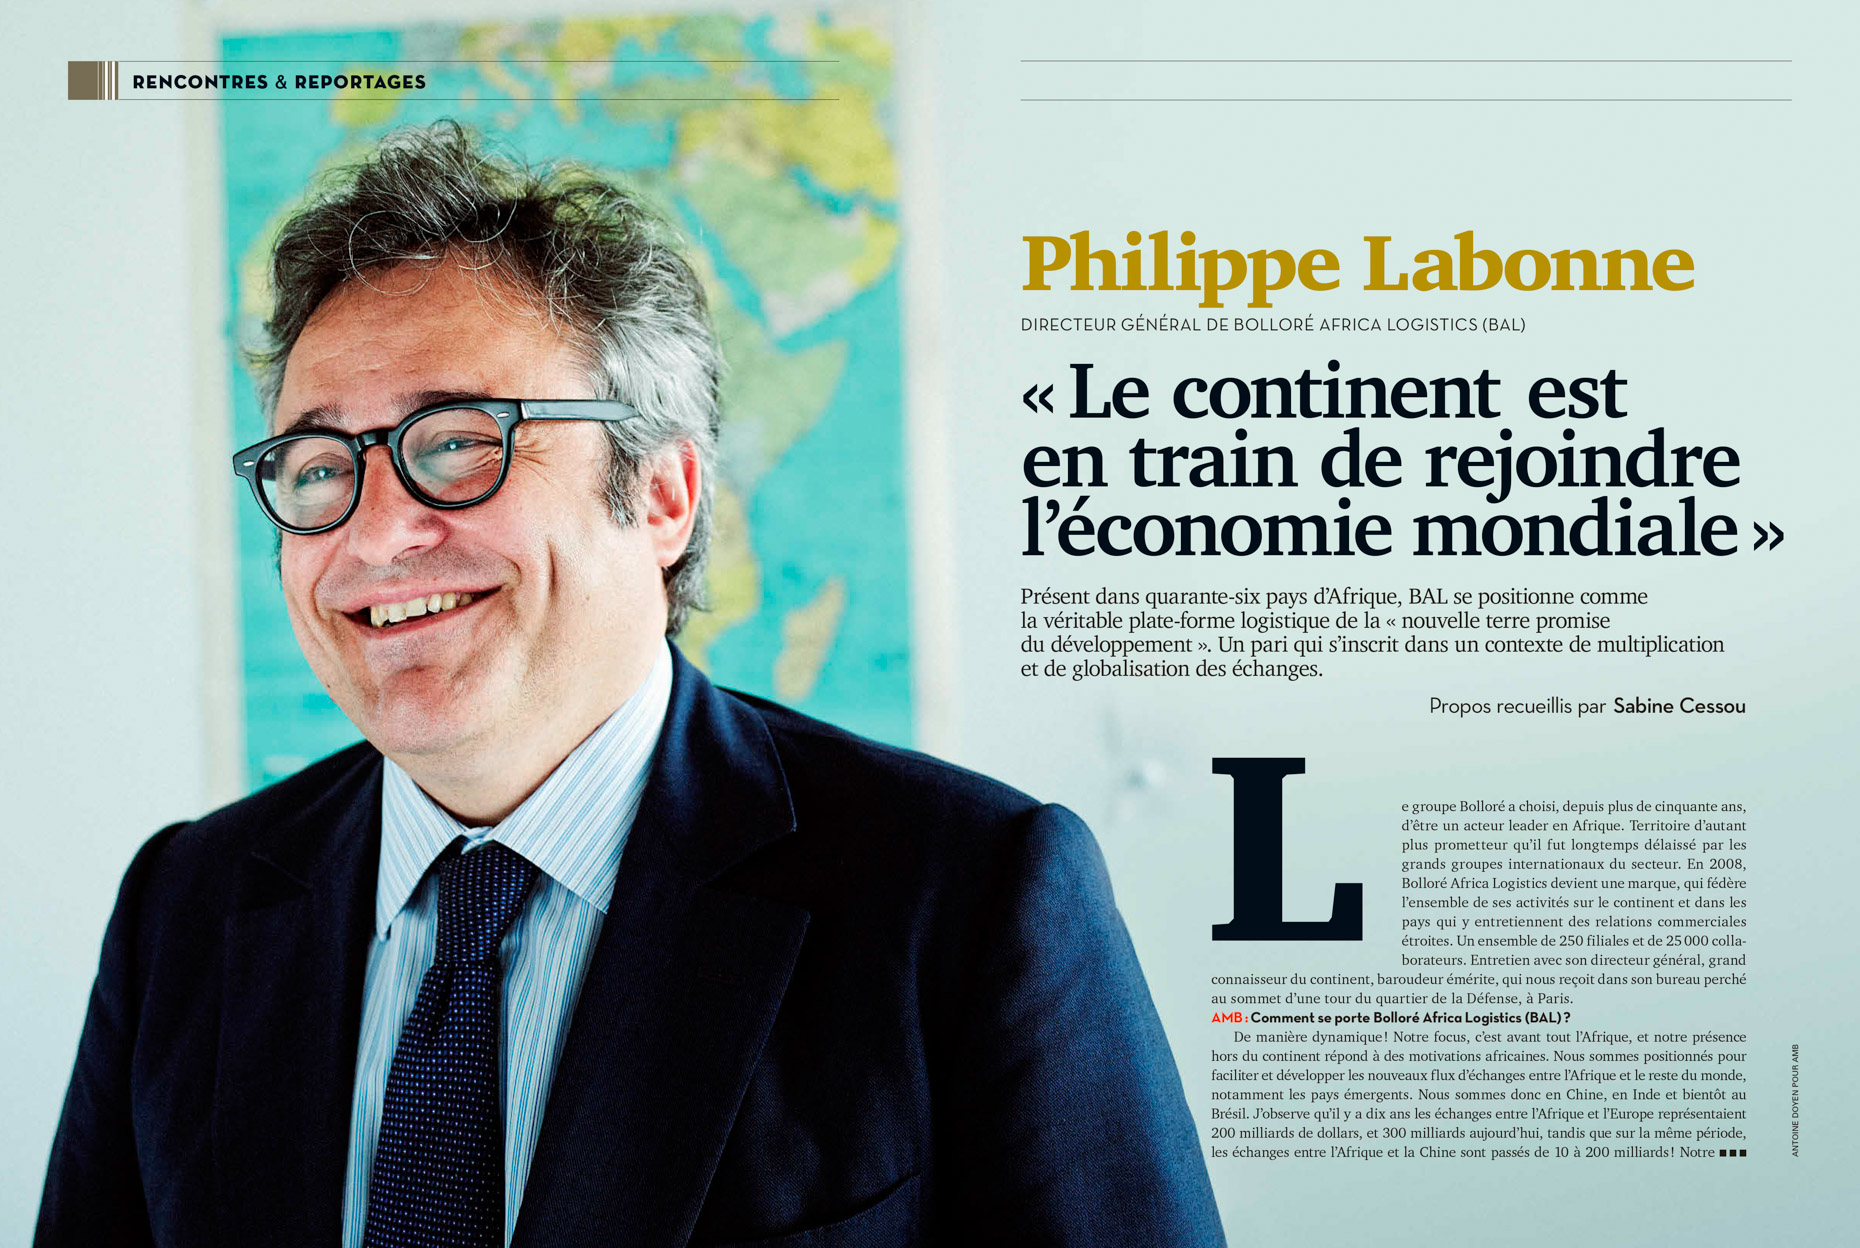 Philippe Labonne AMB